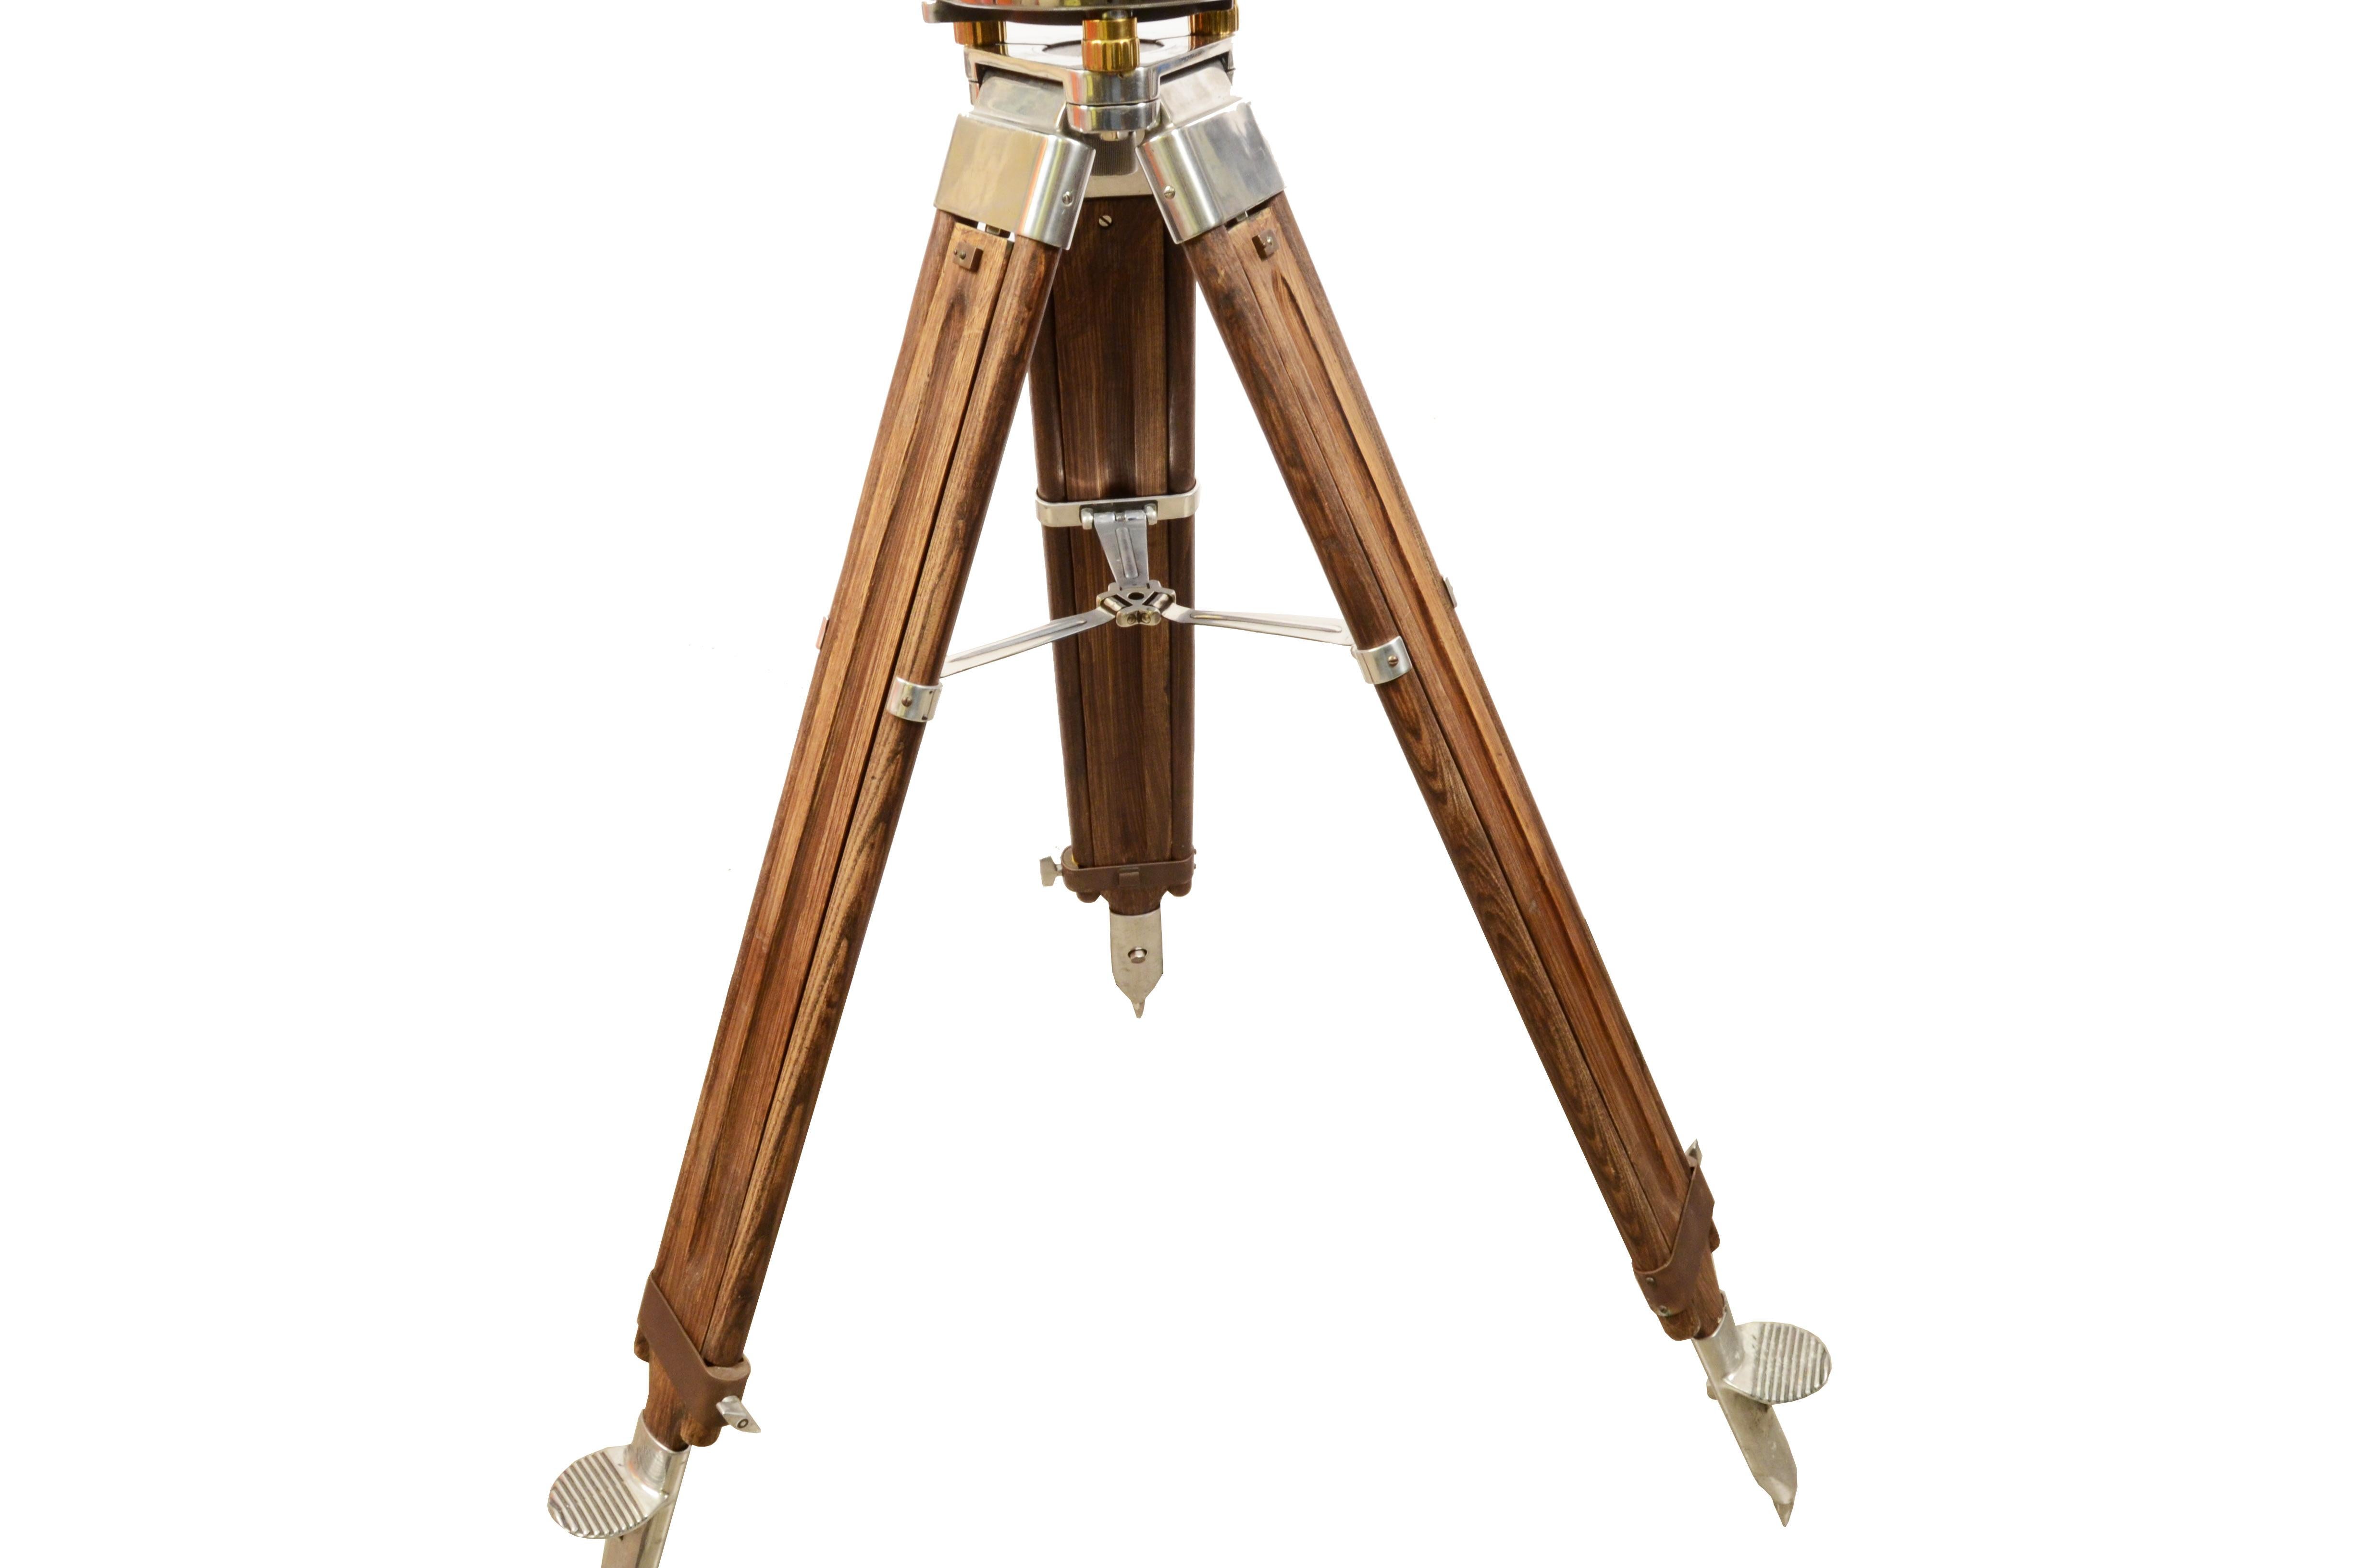 1950s Carl Zeiss Antique Binocular Periscope Surveyor Scientific Instrument 8